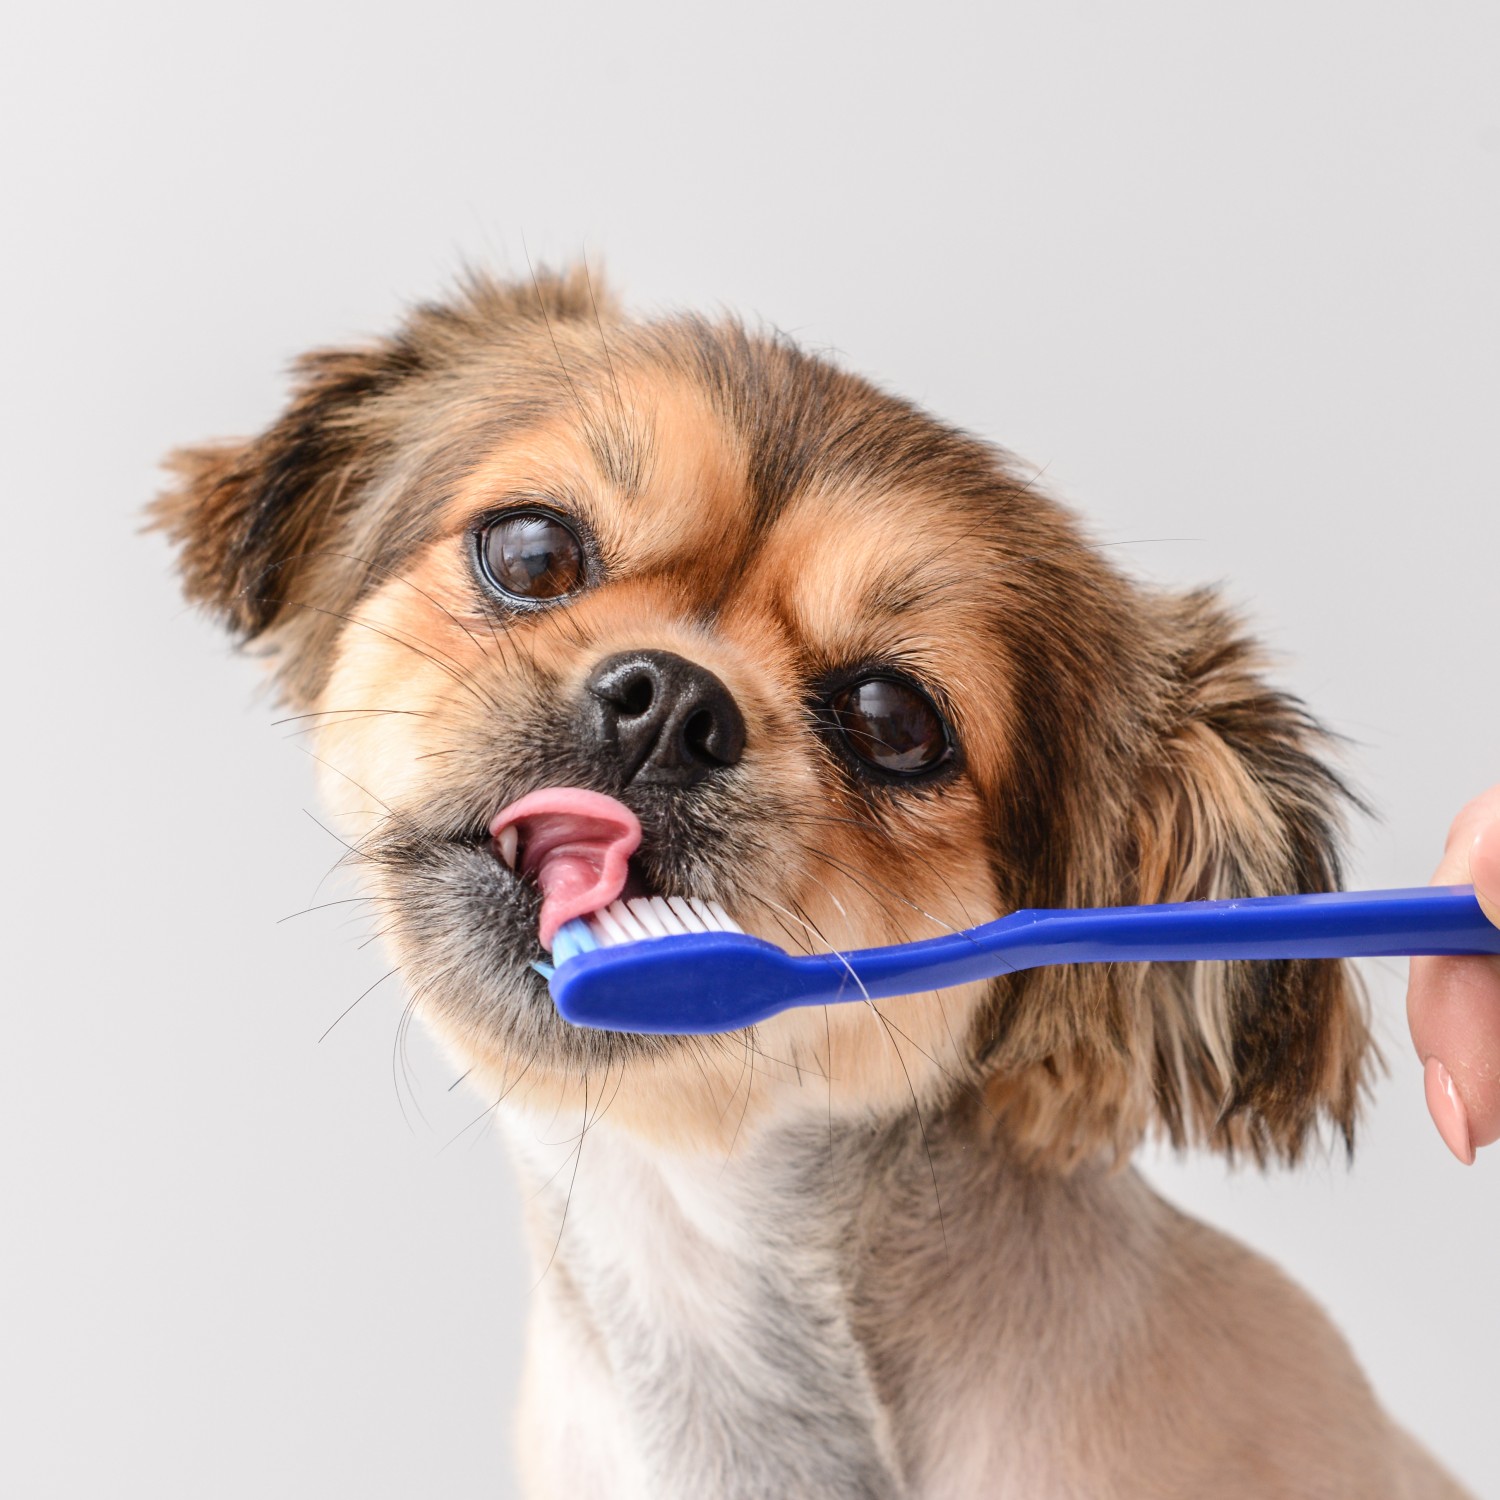 Brown Dog Licking Toothbrush - Dental Services